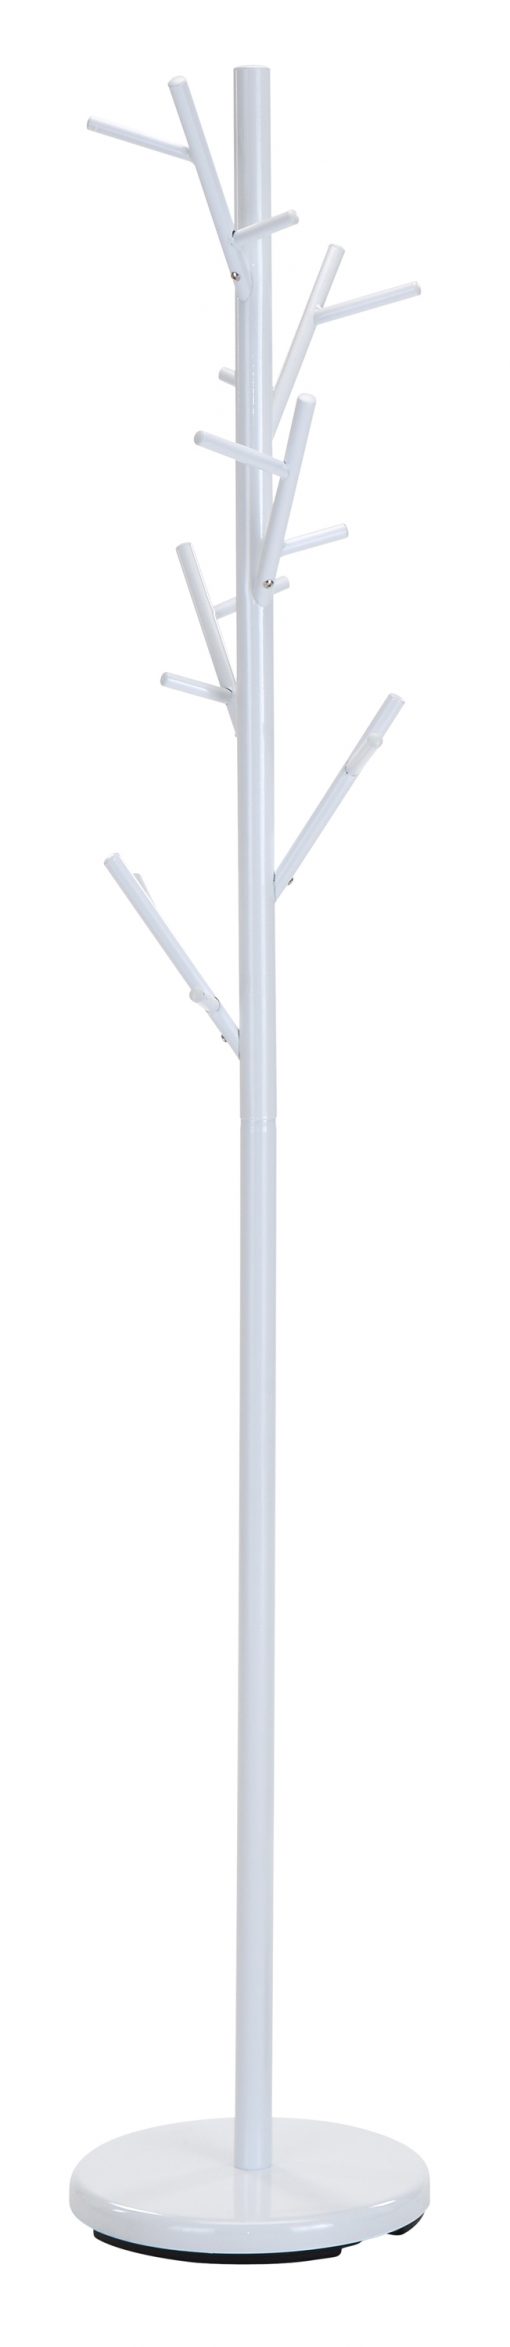 Drabužių kabykla W33 hanger spalva: biały